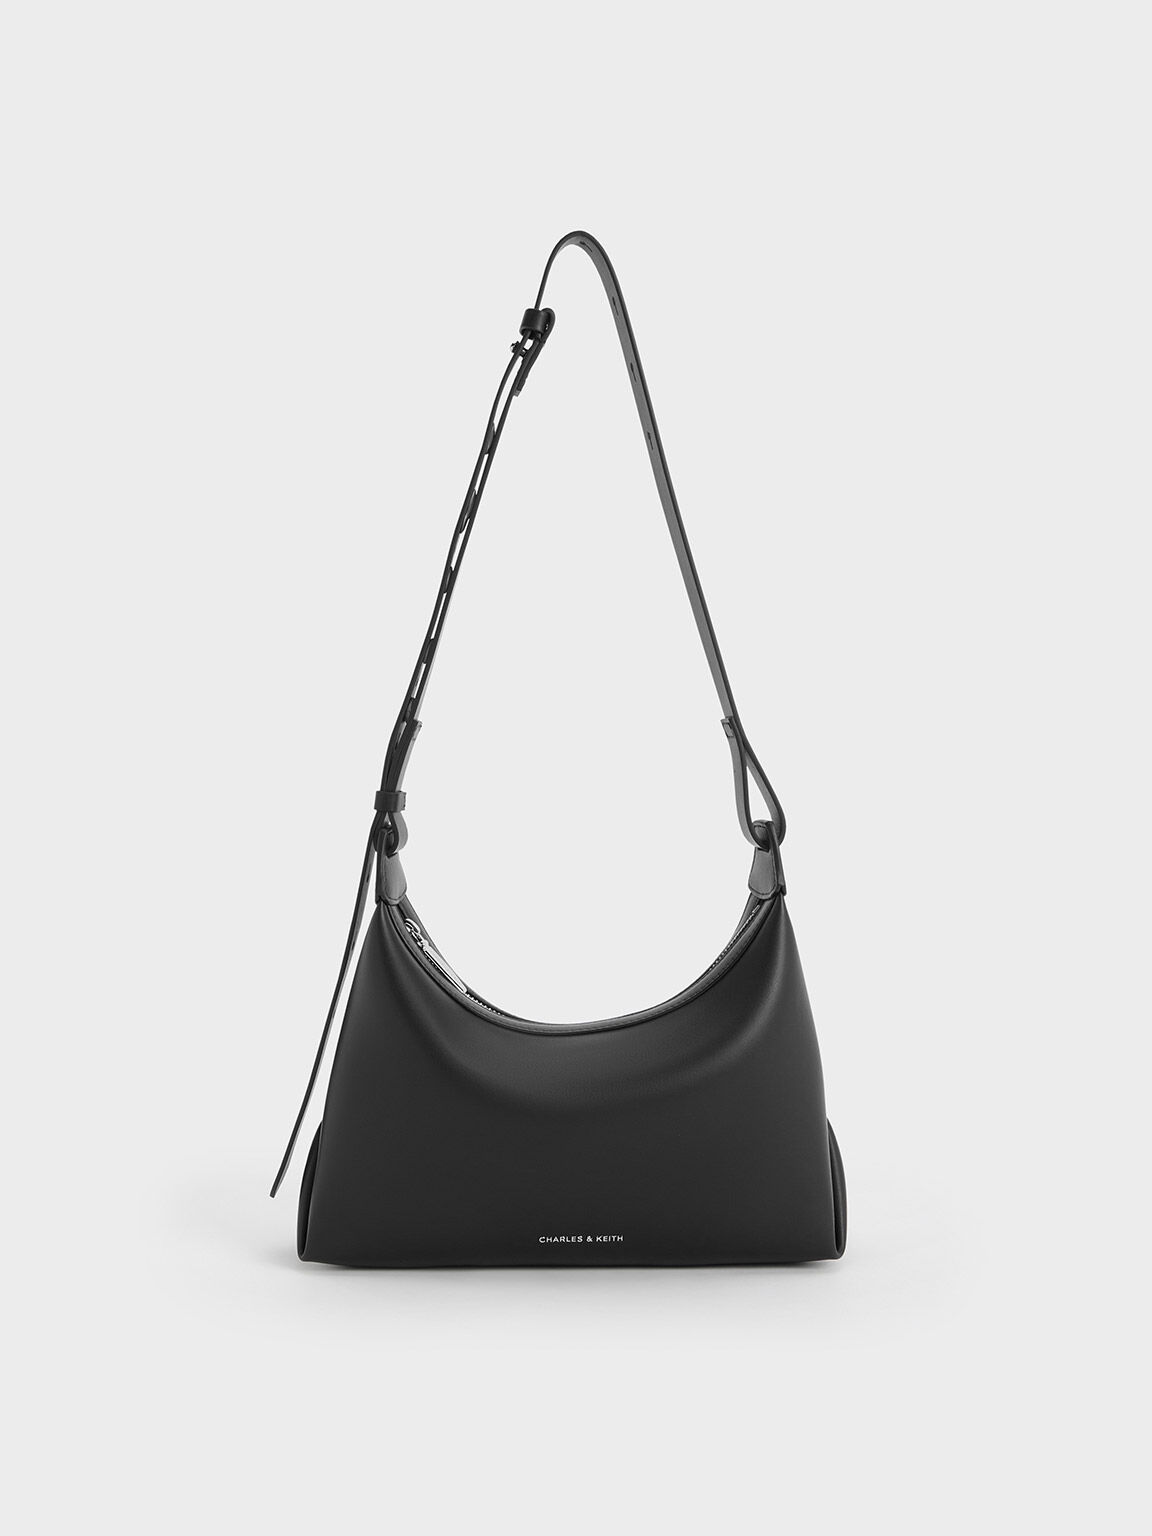 HOBO | Bags | Hobo International Brand Leather Bag | Poshmark